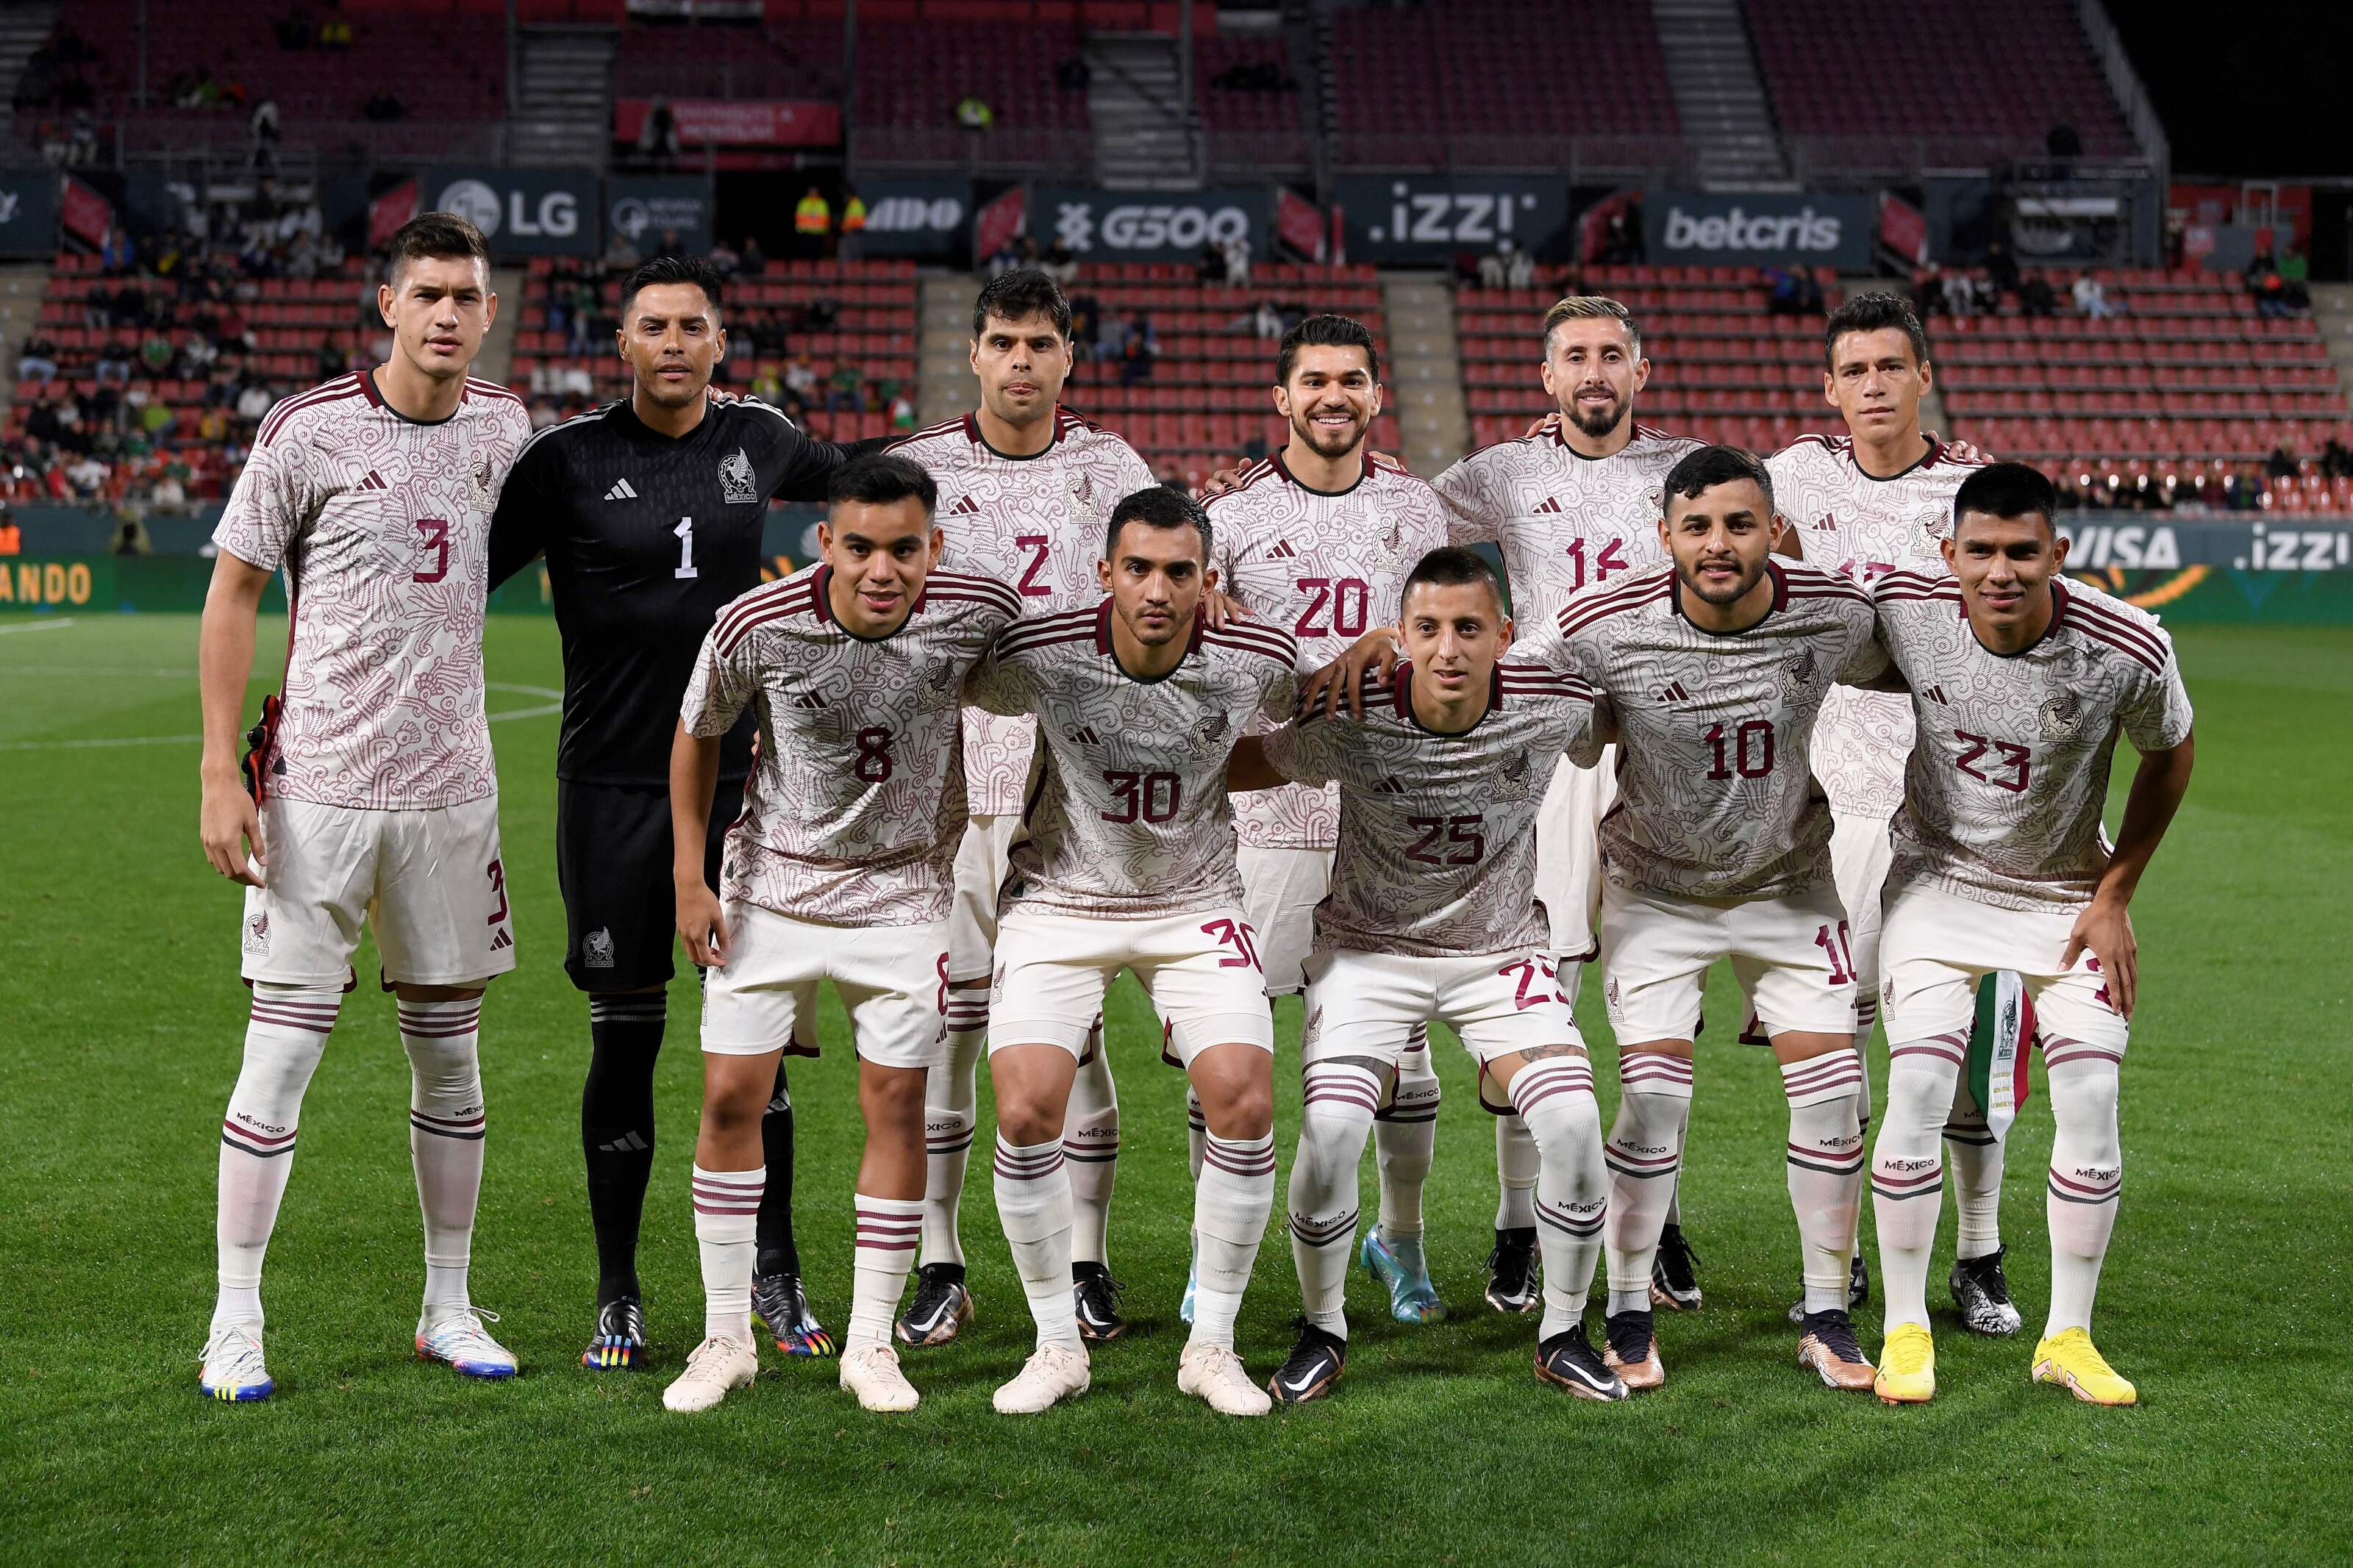 Arena soccer: Farber, Perera lead Team USA past Mexico – Daily